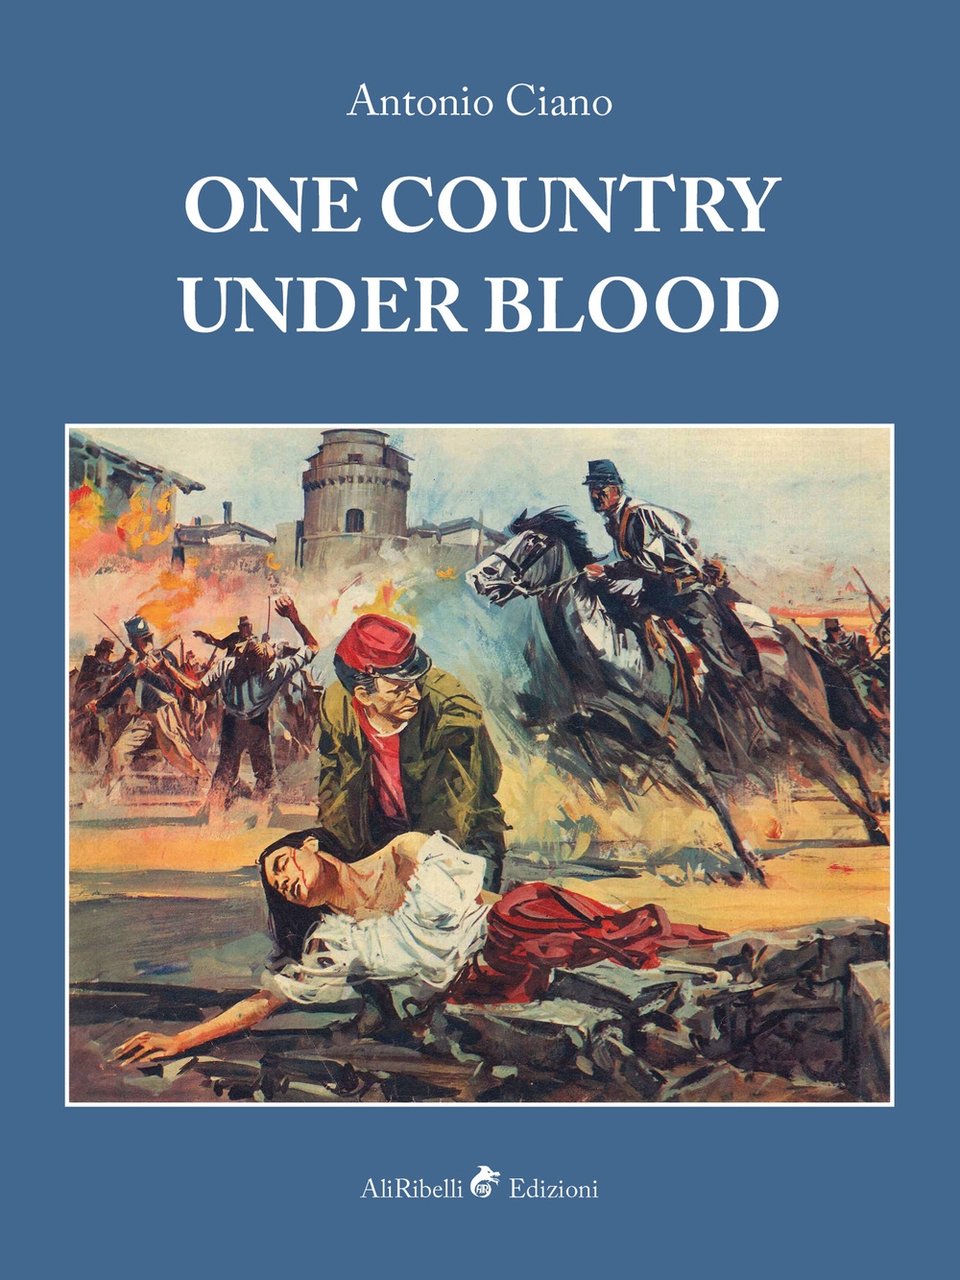 One country under blood, Gaeta, Ali Ribelli Edizioni, 2018